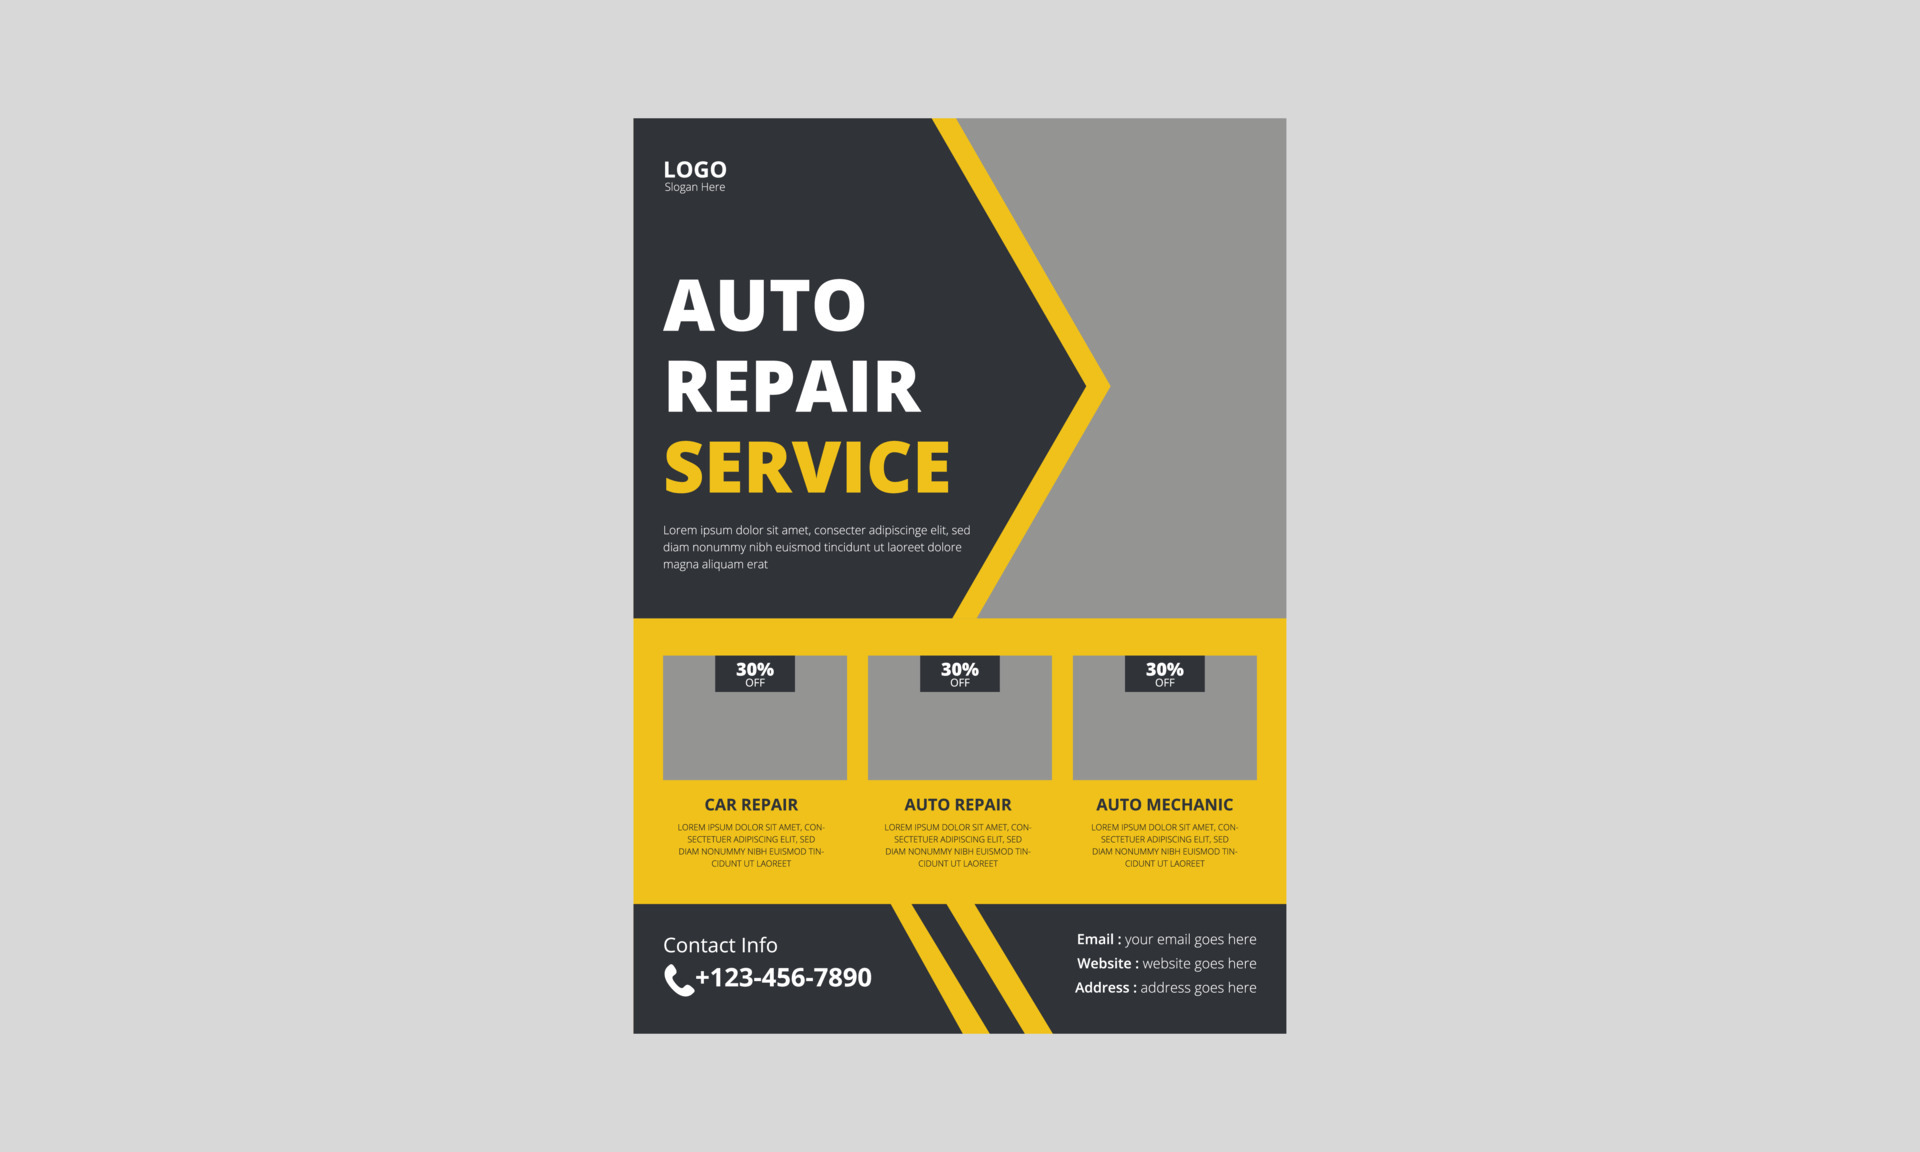 Auto Repair Flyer Template, Automobile Service flyer, Car Repair poster